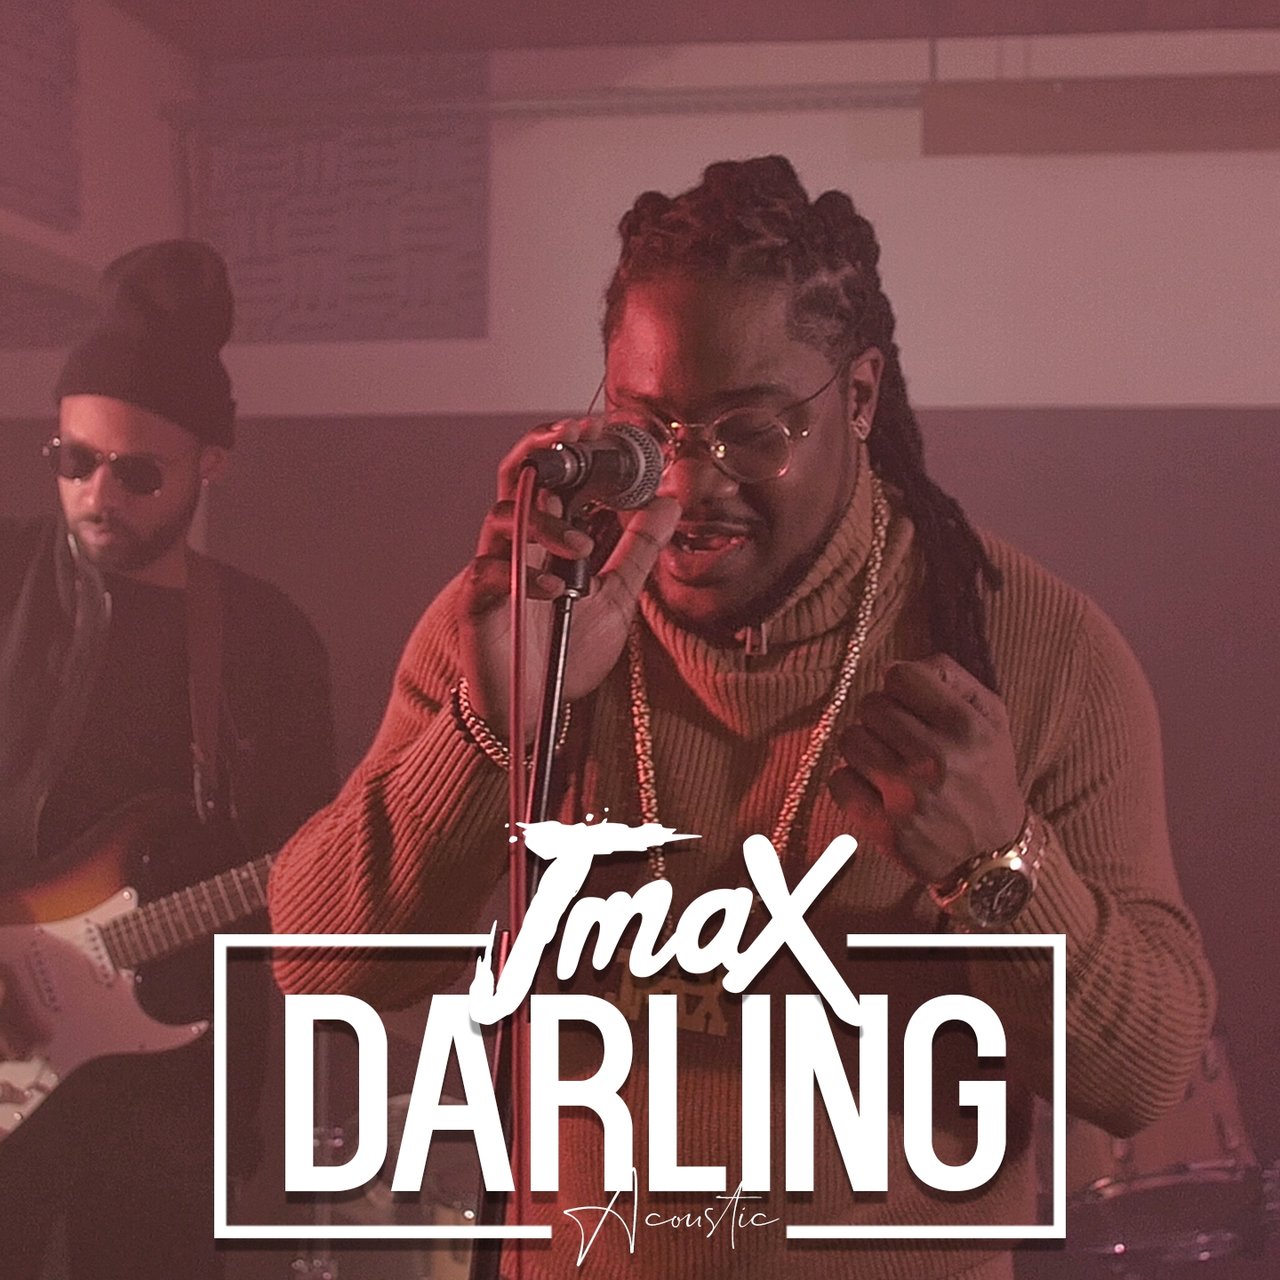 Jmax - Darling (Acoustic) (Cover)